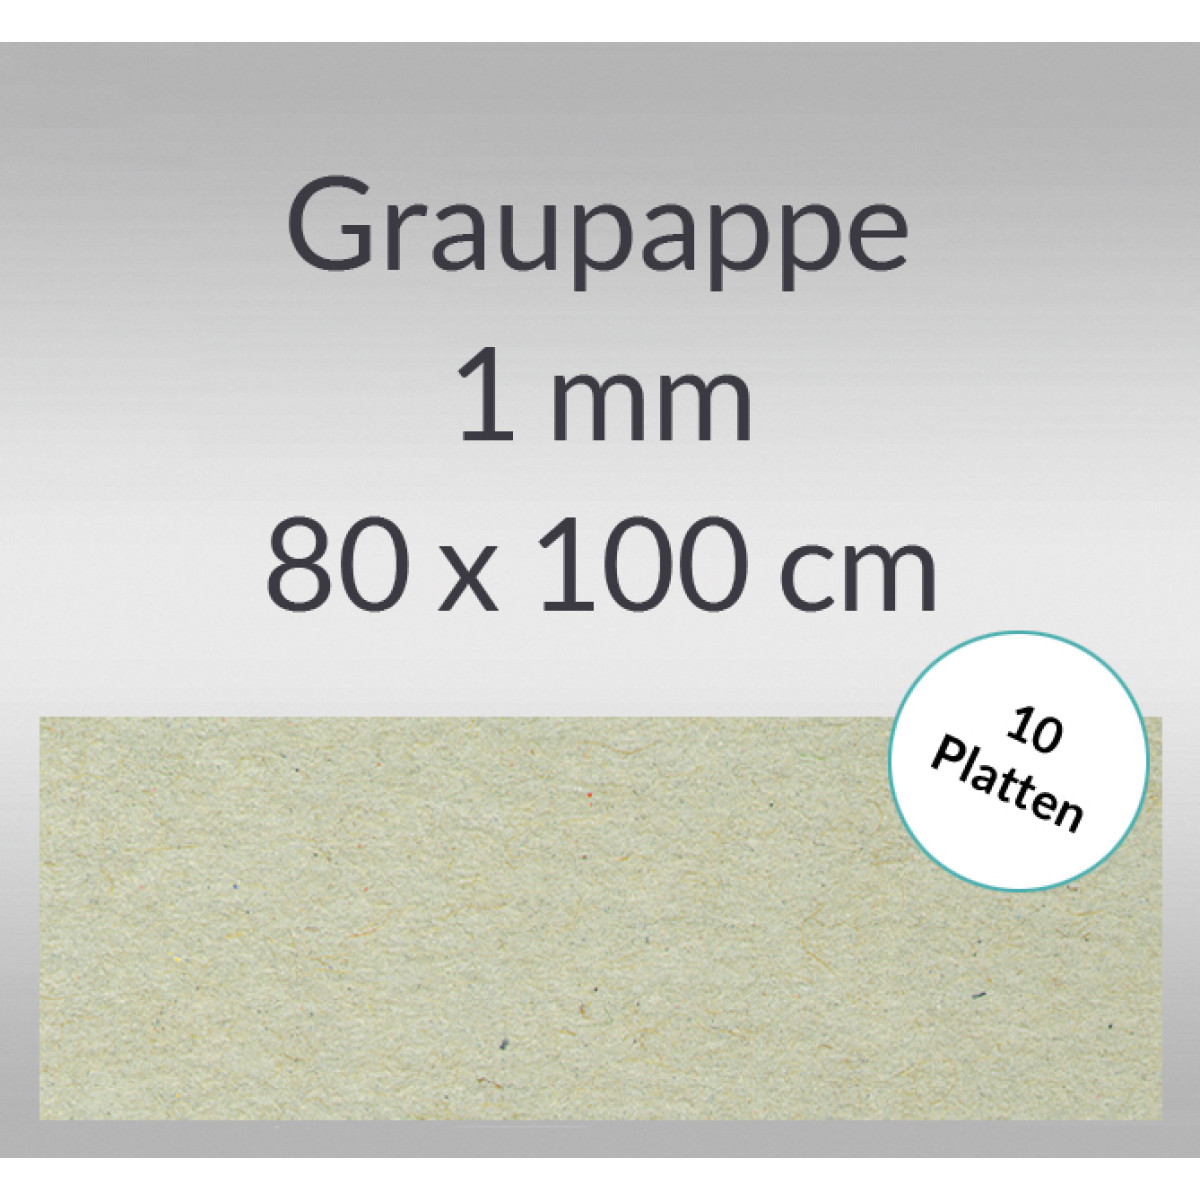 Graupappe 80 x 100 cm - 1 mm